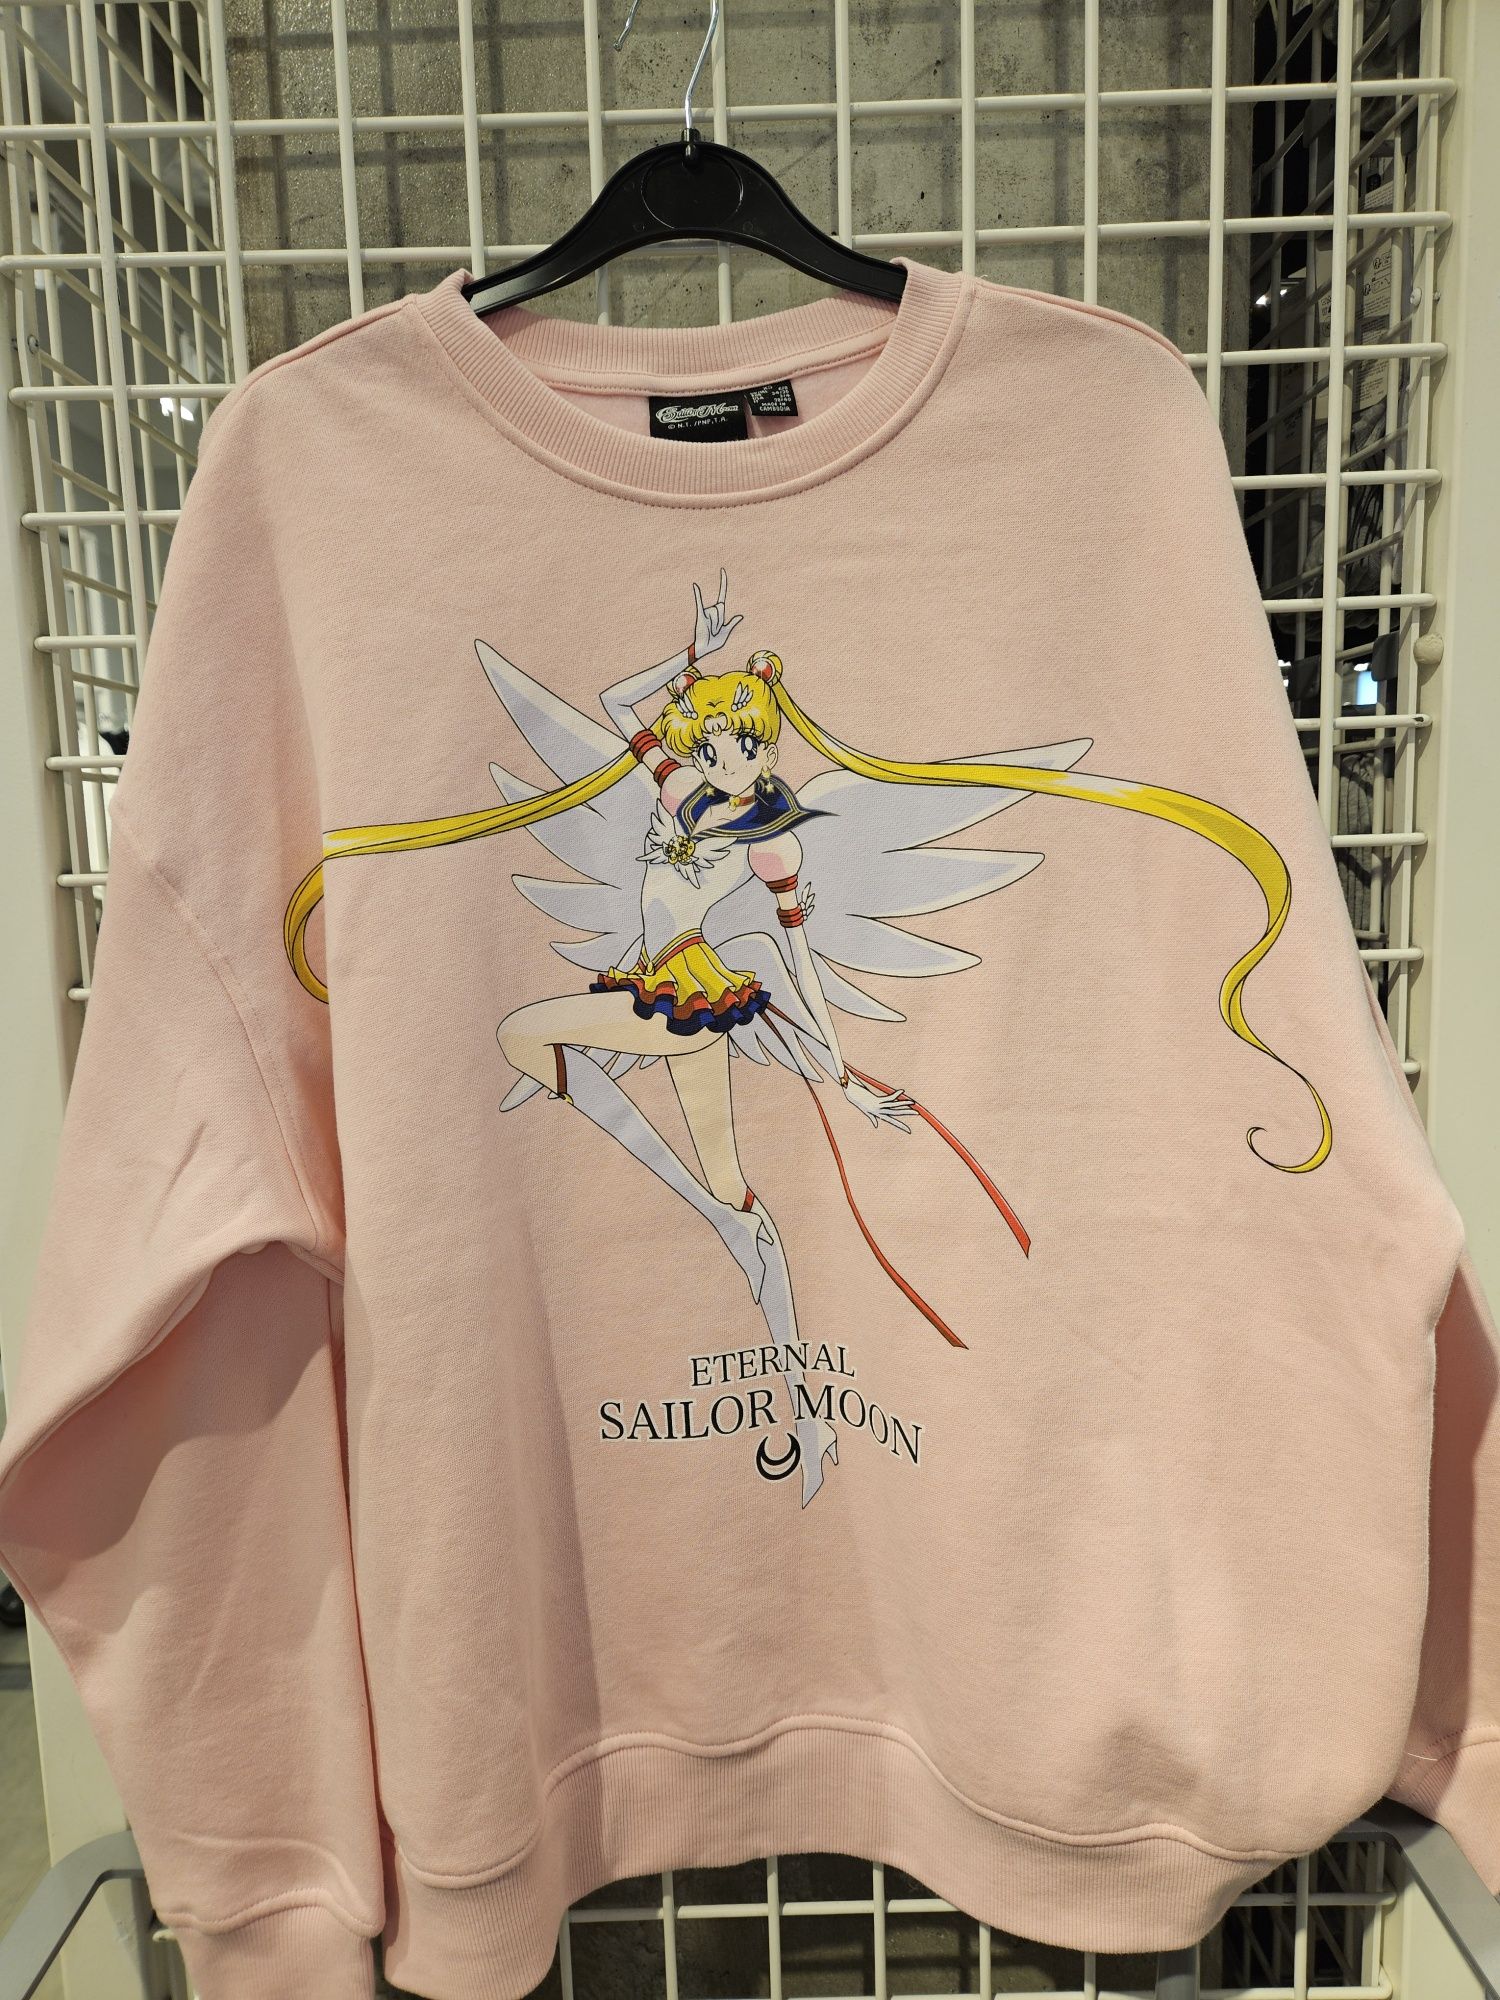 Sailor moon - camisola original Toei Animation